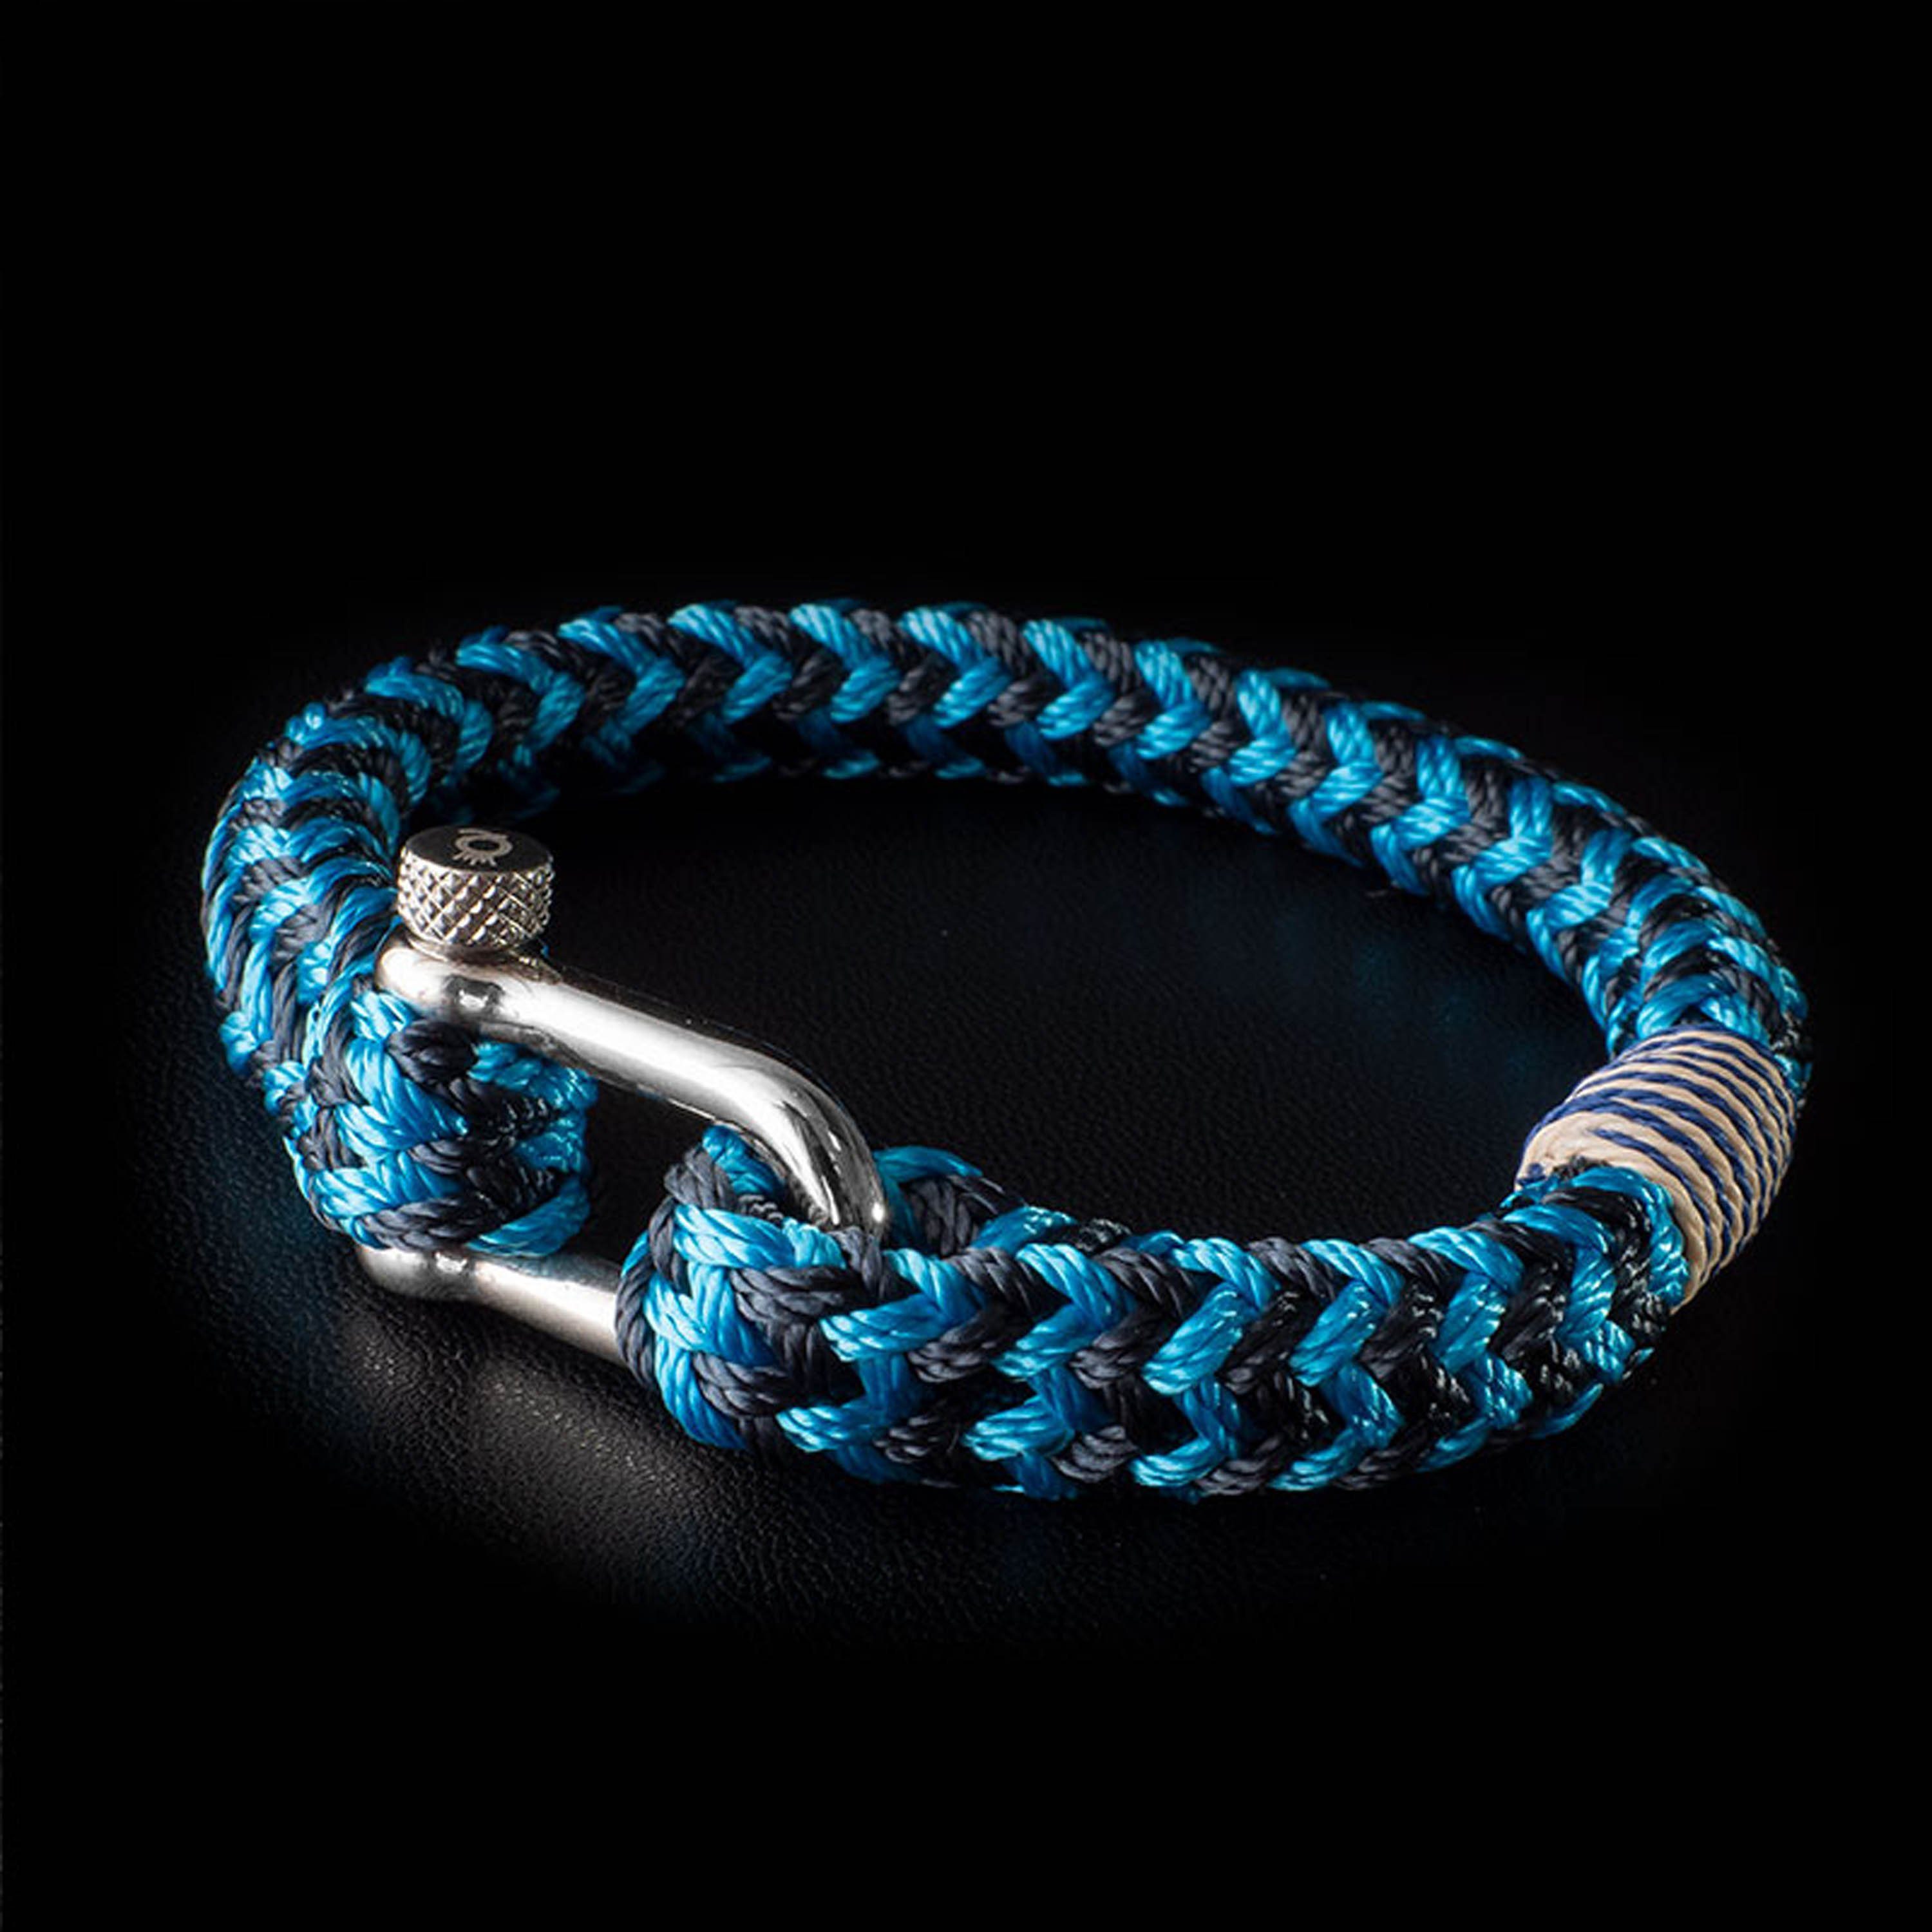 aus Maritime maritime, Style, (Edelstahl, handgefertigt) "OCEAN" Ocean Segeltau Segeltau, Armband UNIQAL.de Schäckel Armband Casual nautics, Blue